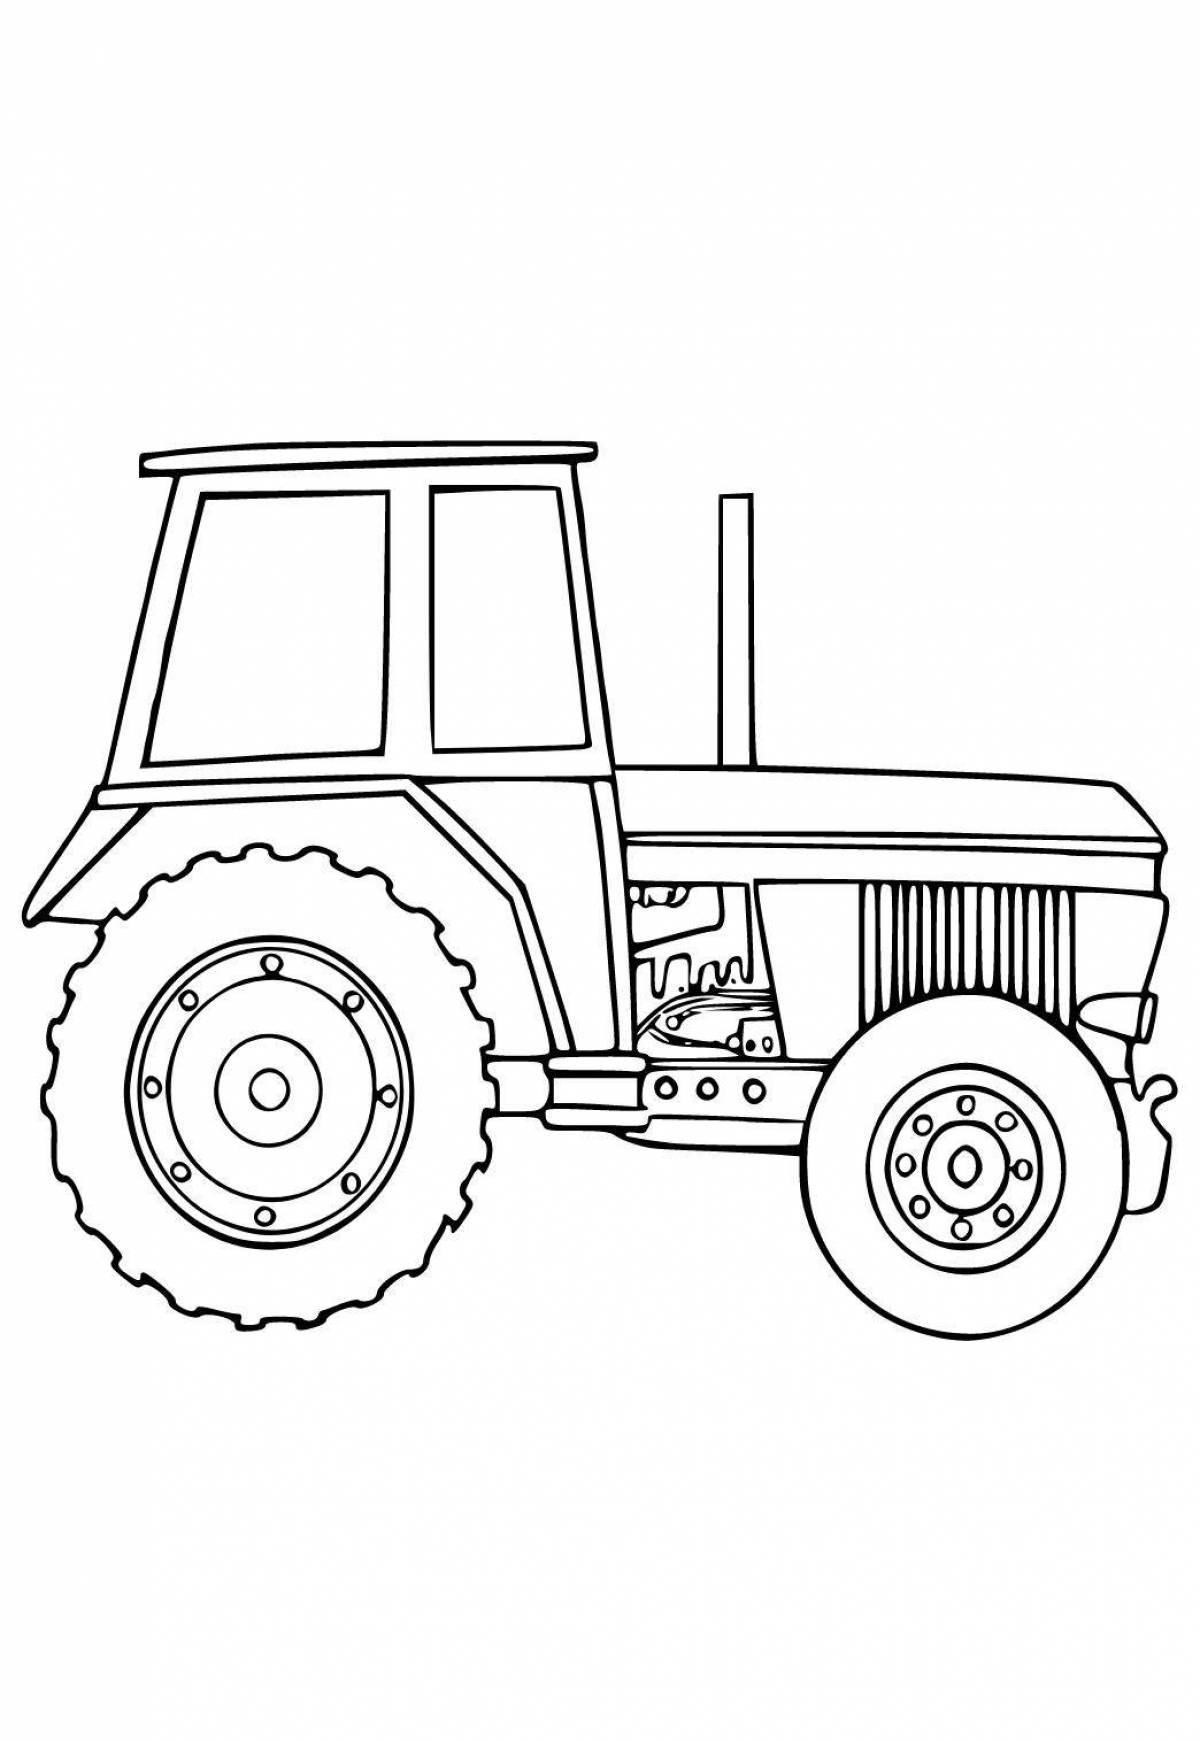 Эскиз трактора рисунок